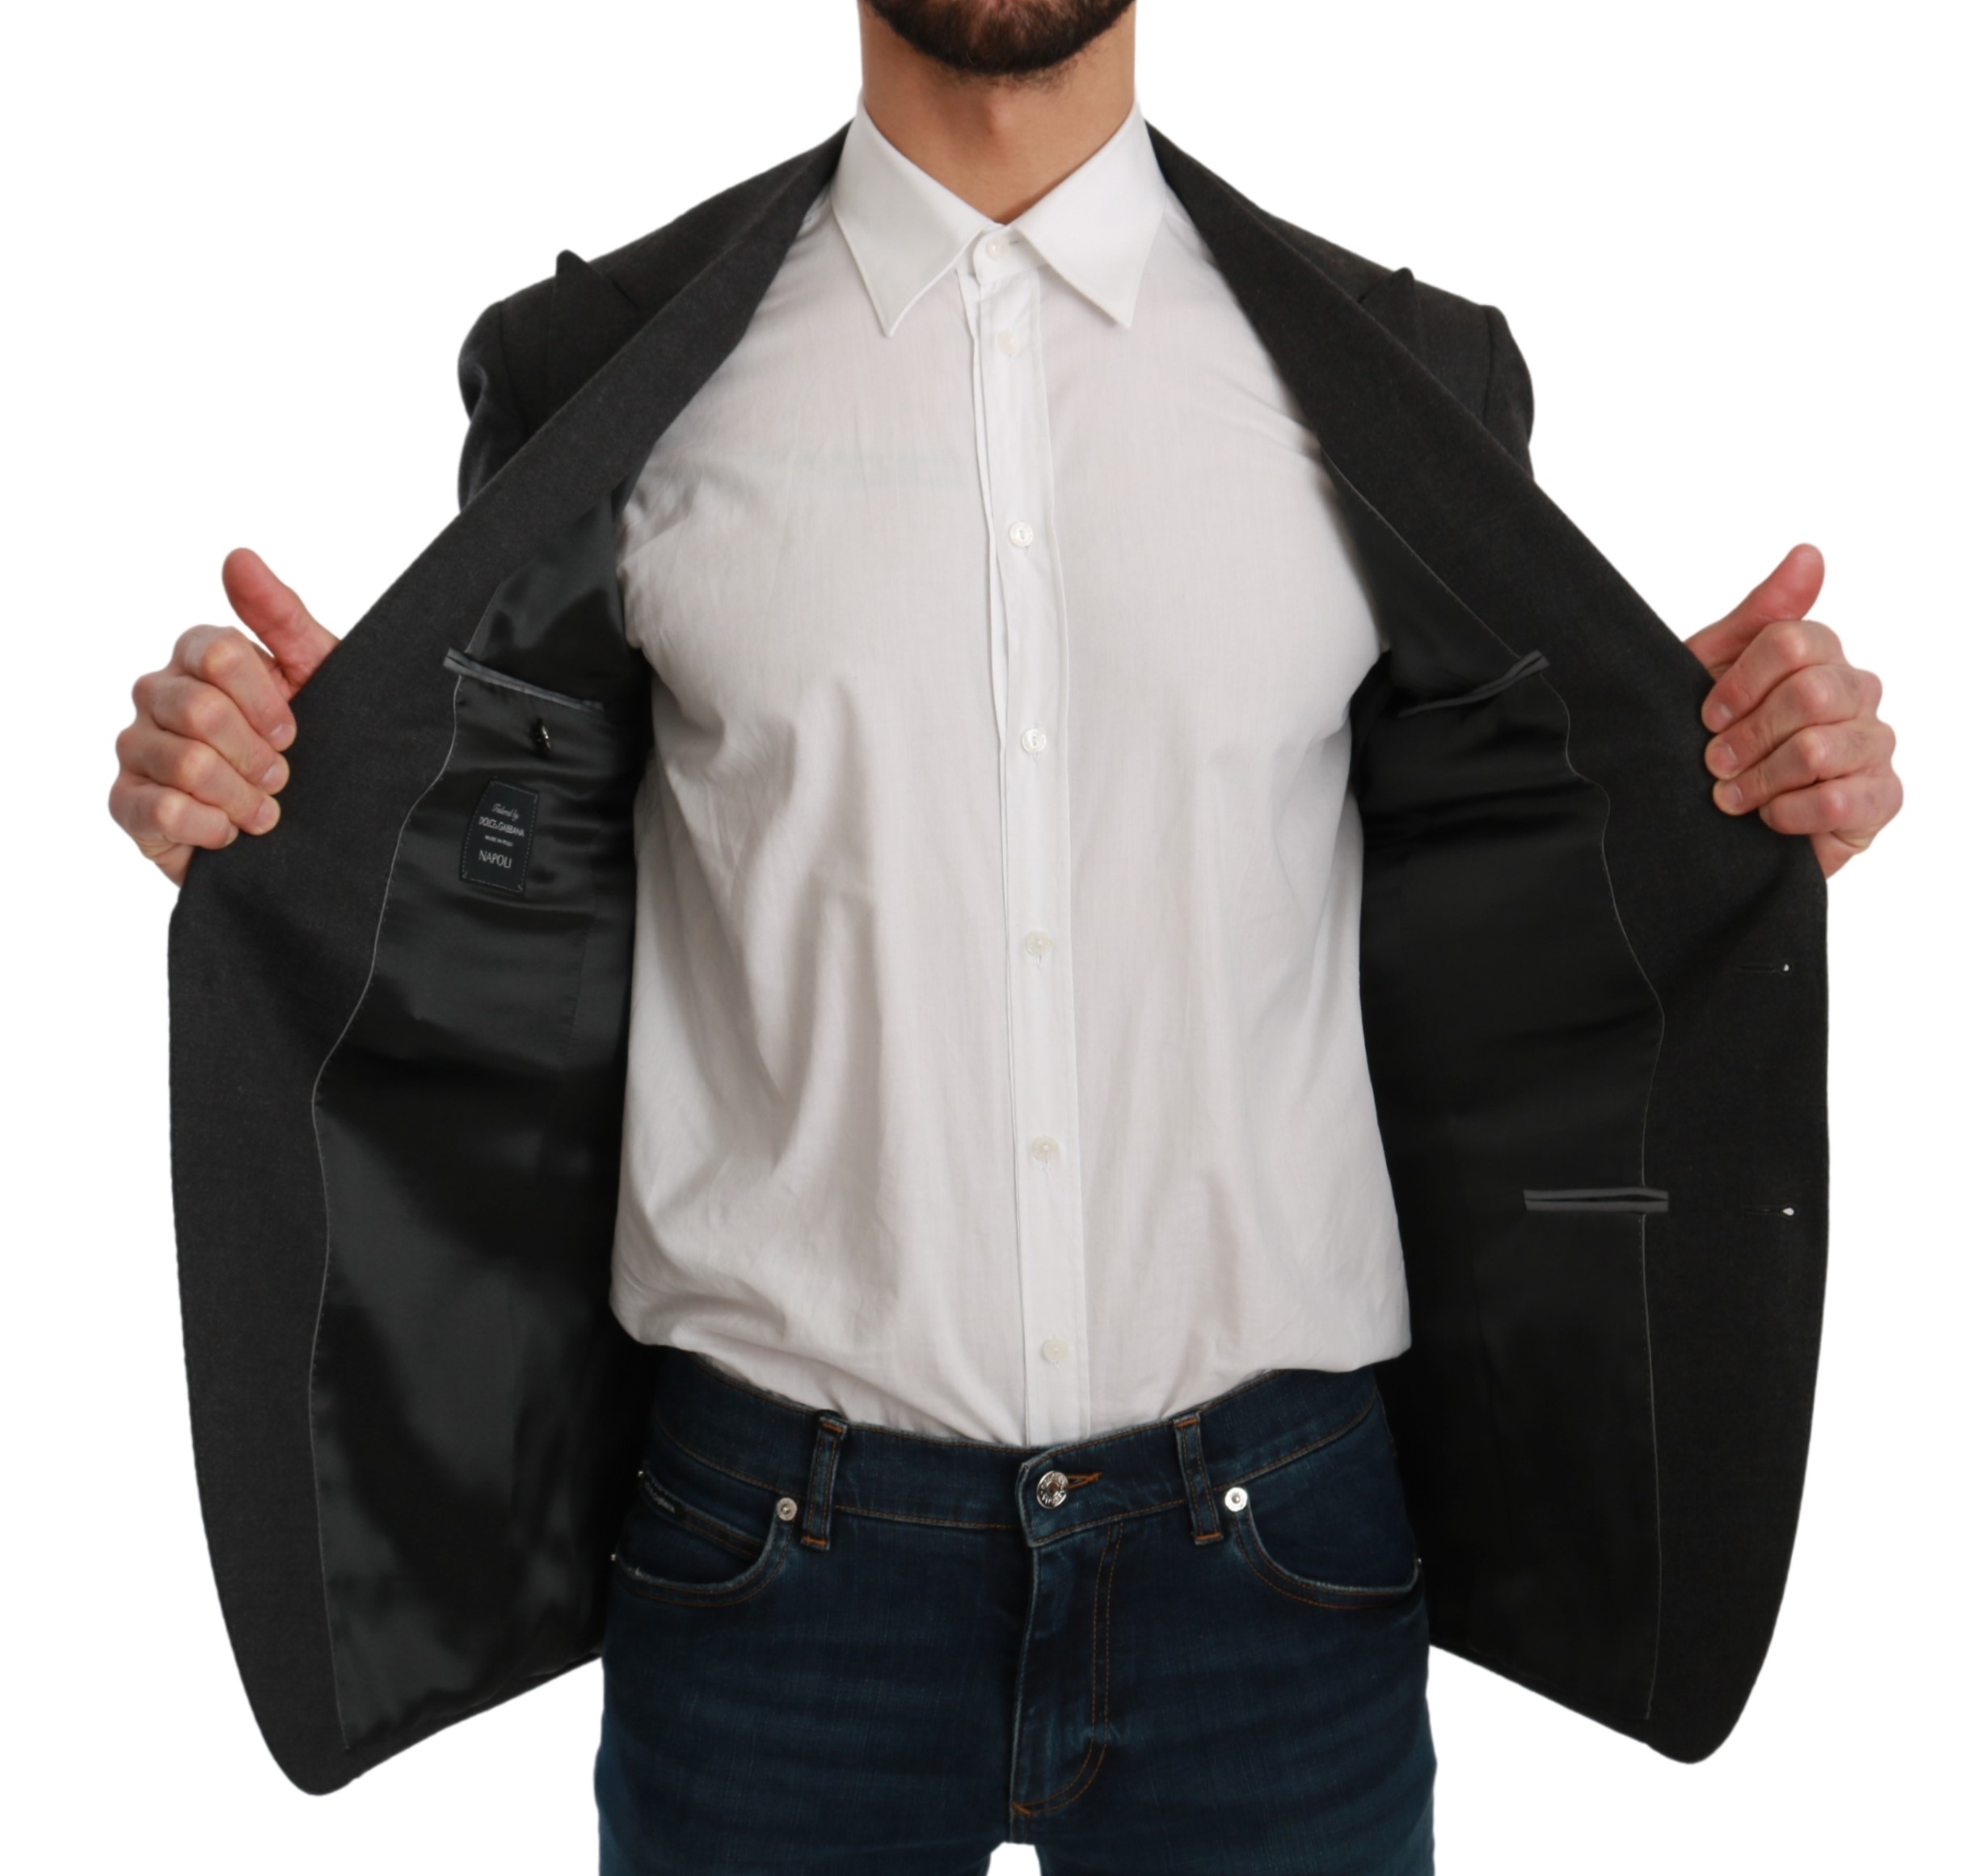 Dolce & Gabbana Napoli Slim Fit Jacket Wool Blazer in Gray - Save 25% Womens Mens Clothing Mens Jackets Blazers Black 